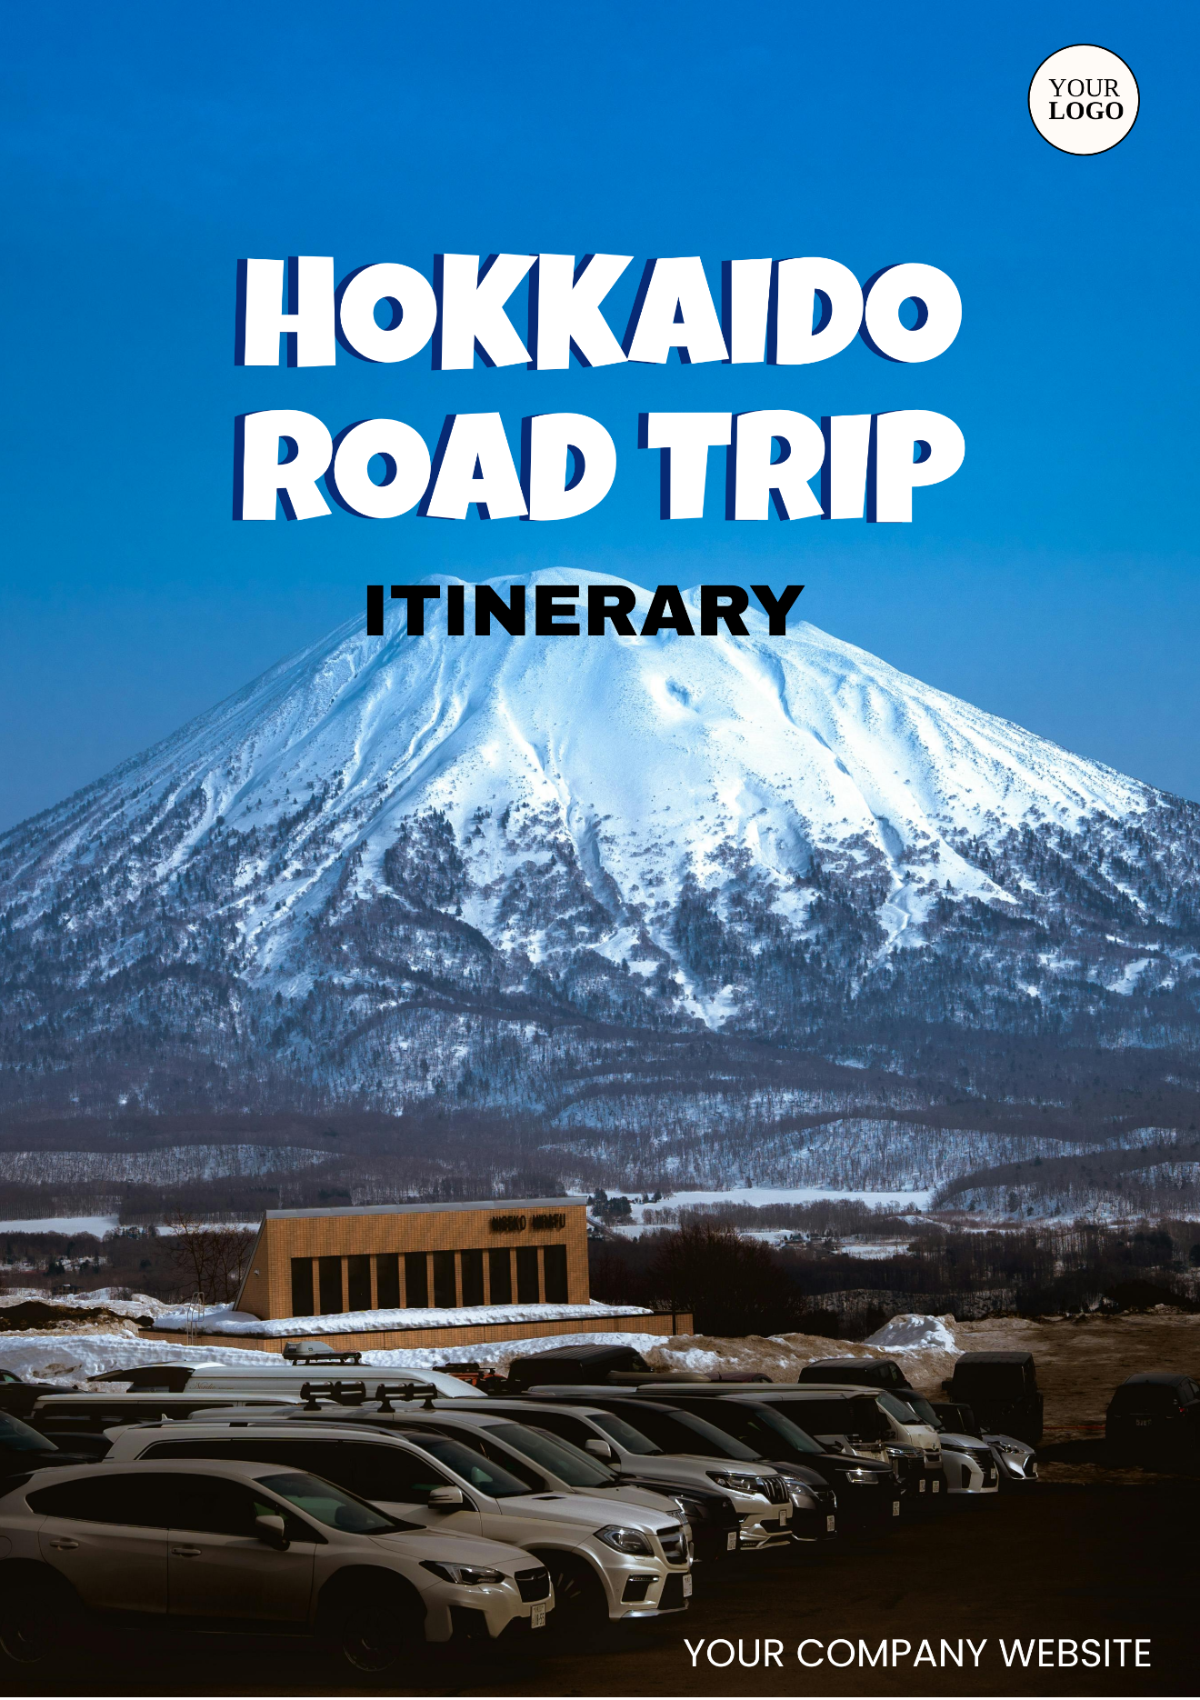 Hokkaido Road Trip Itinerary Template